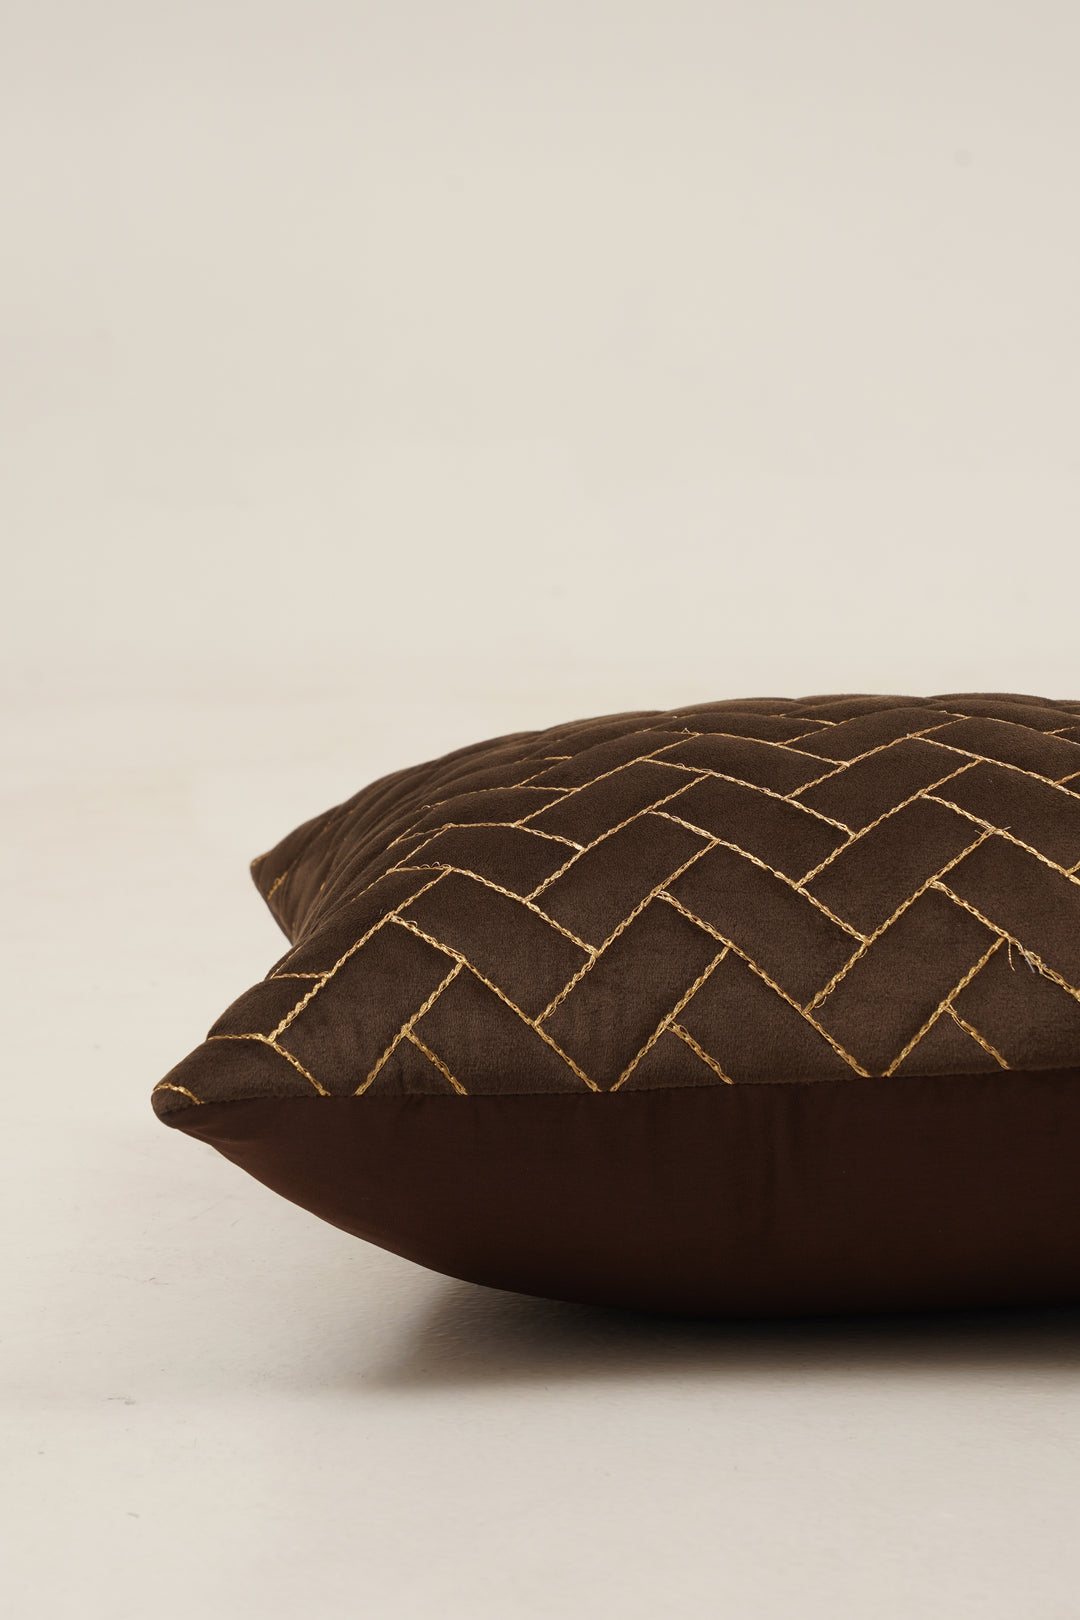 Quad Cushion Cover  16 x16.Set of 2  (Dark Brown)